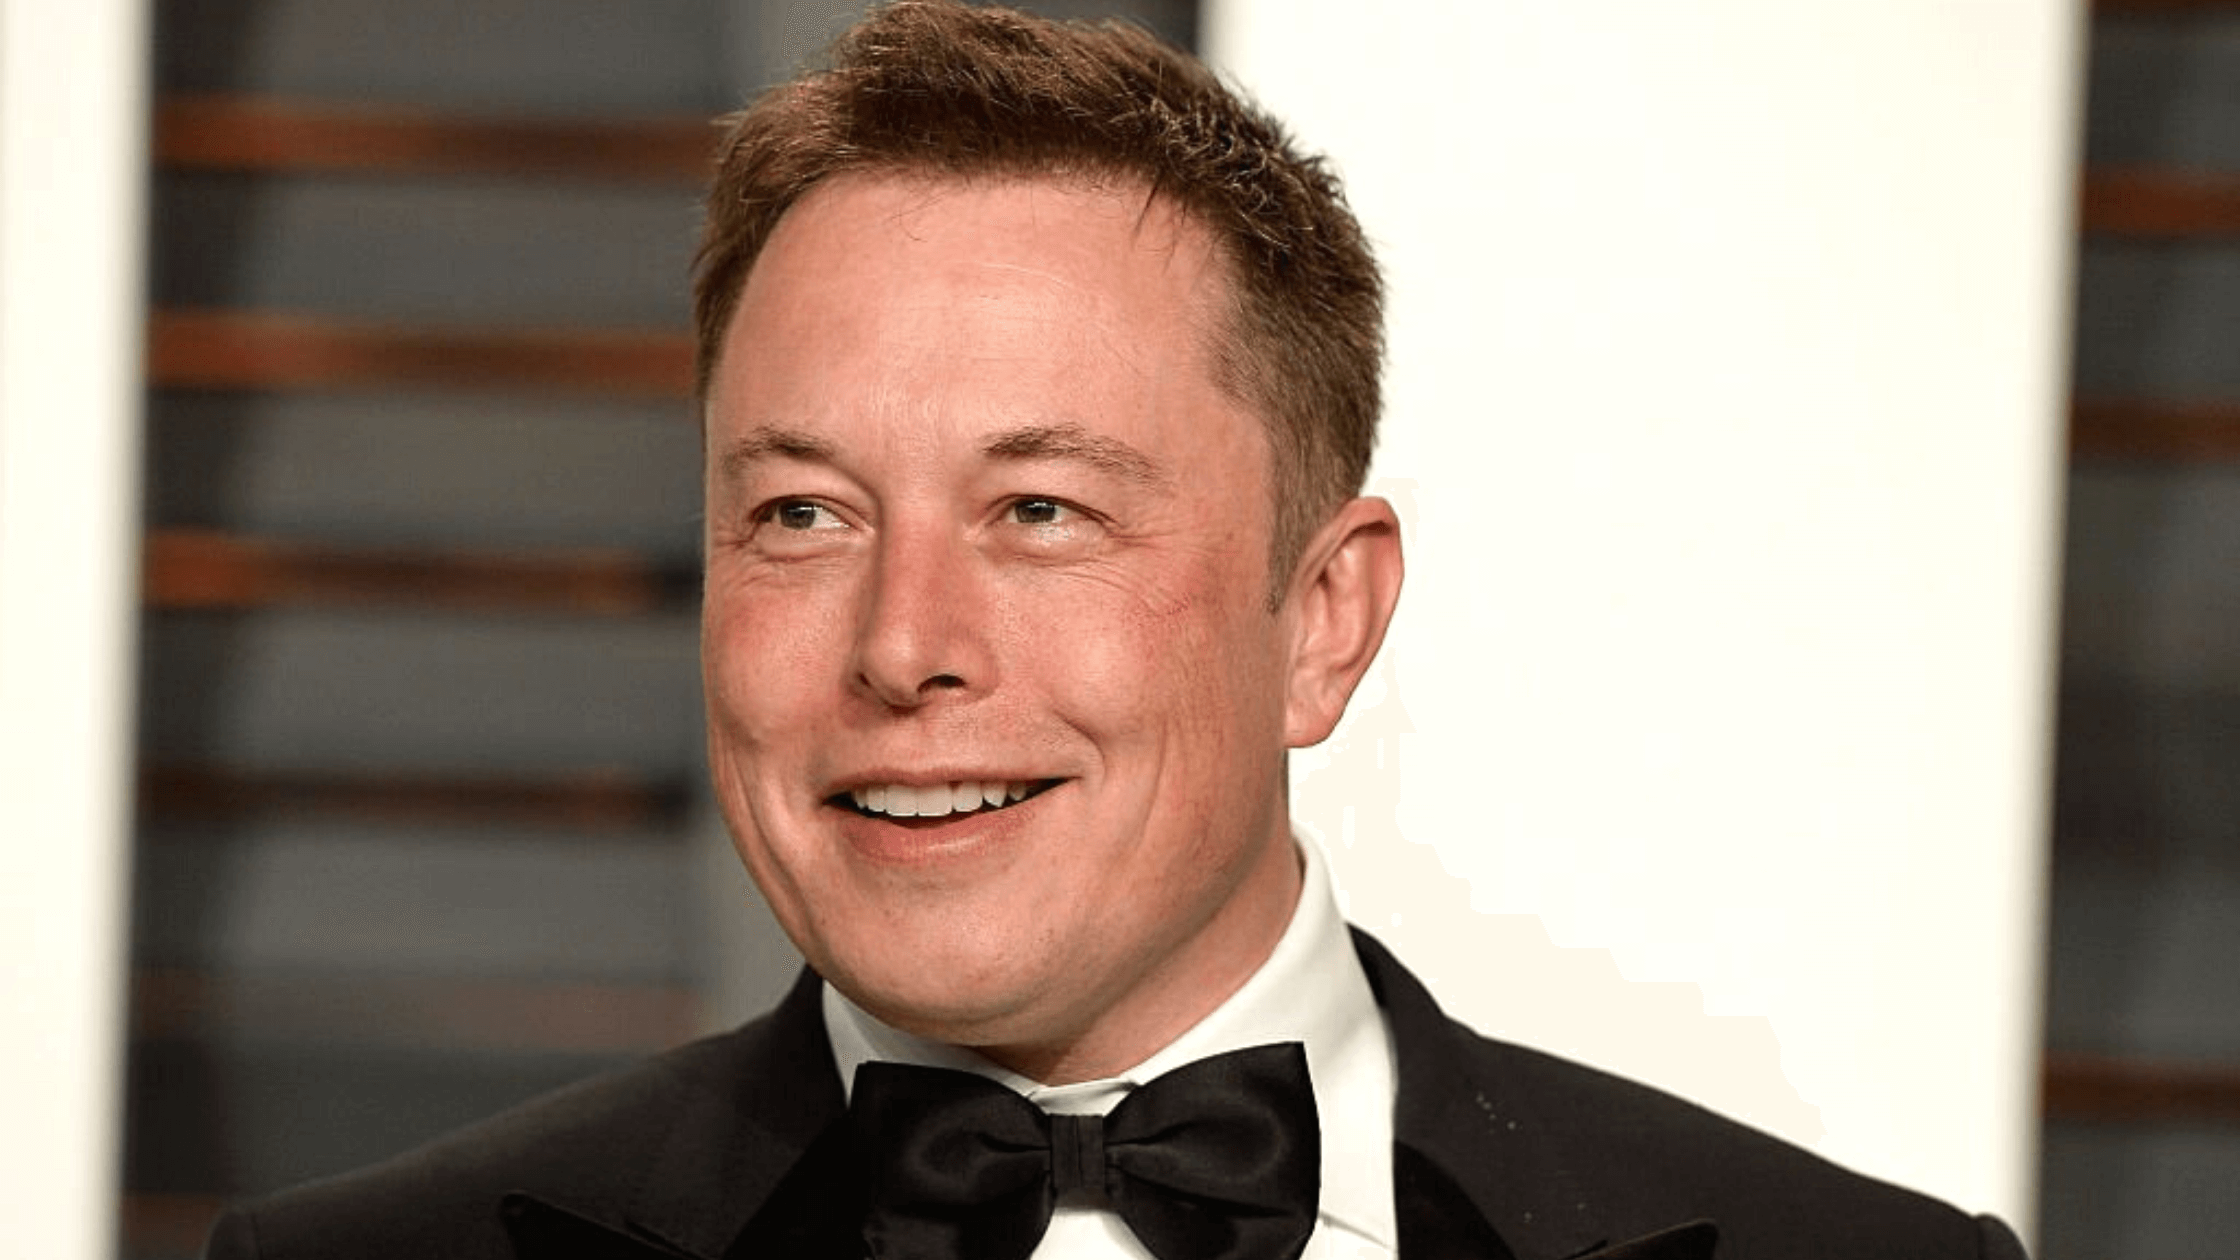 Twitter Confirms $44 Billion Sale To Elon Musk